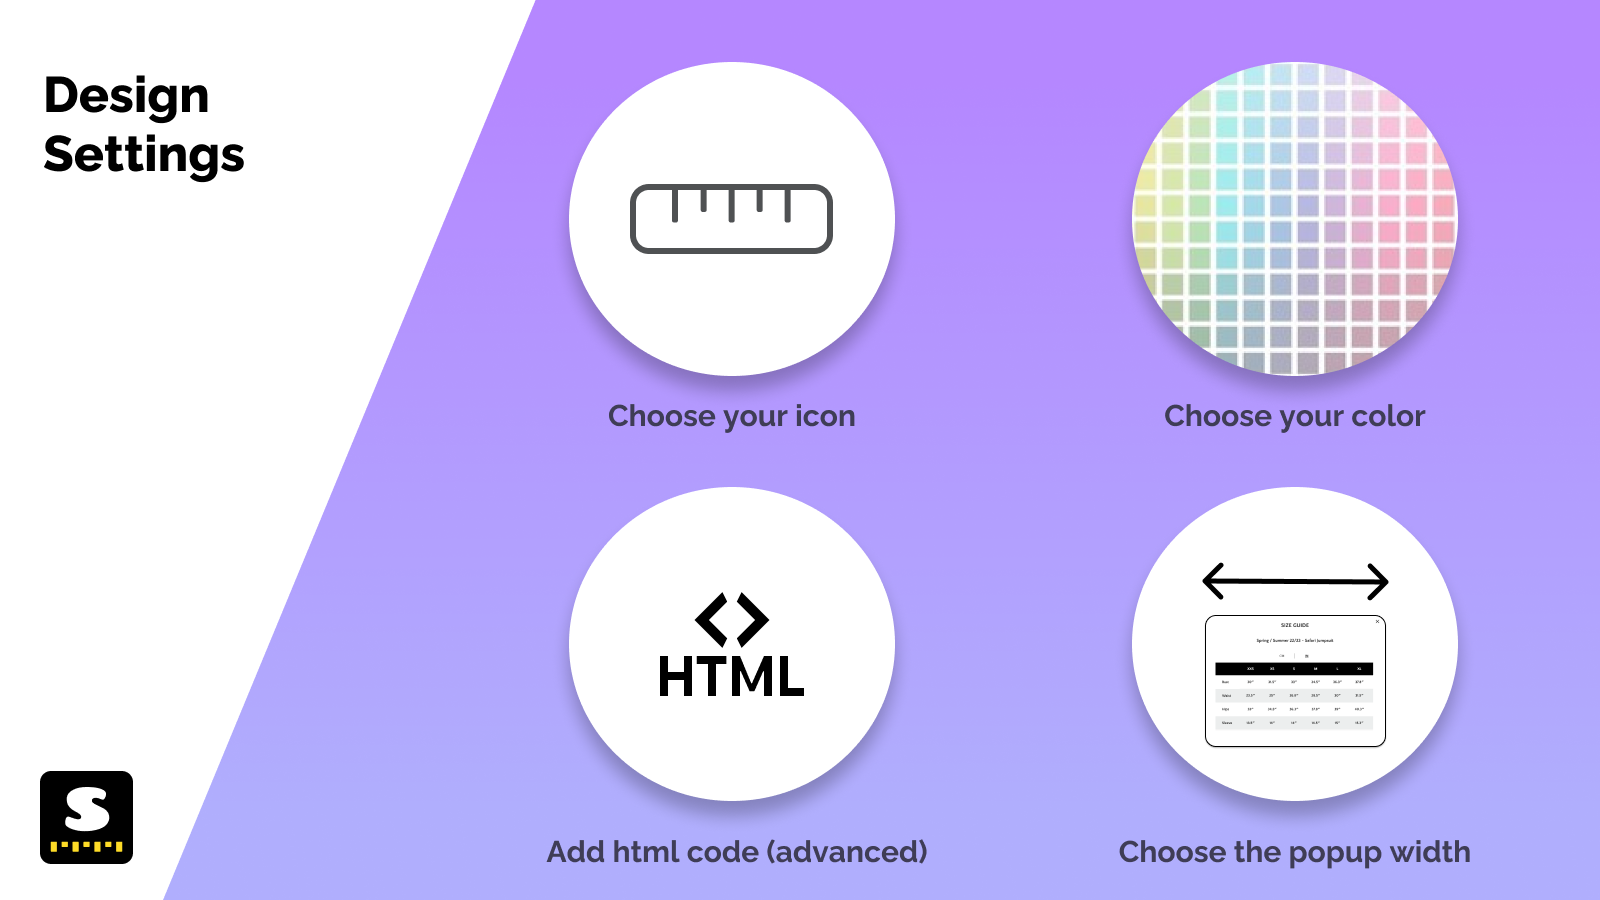 Design settings, choose icon, choose colors, choose width